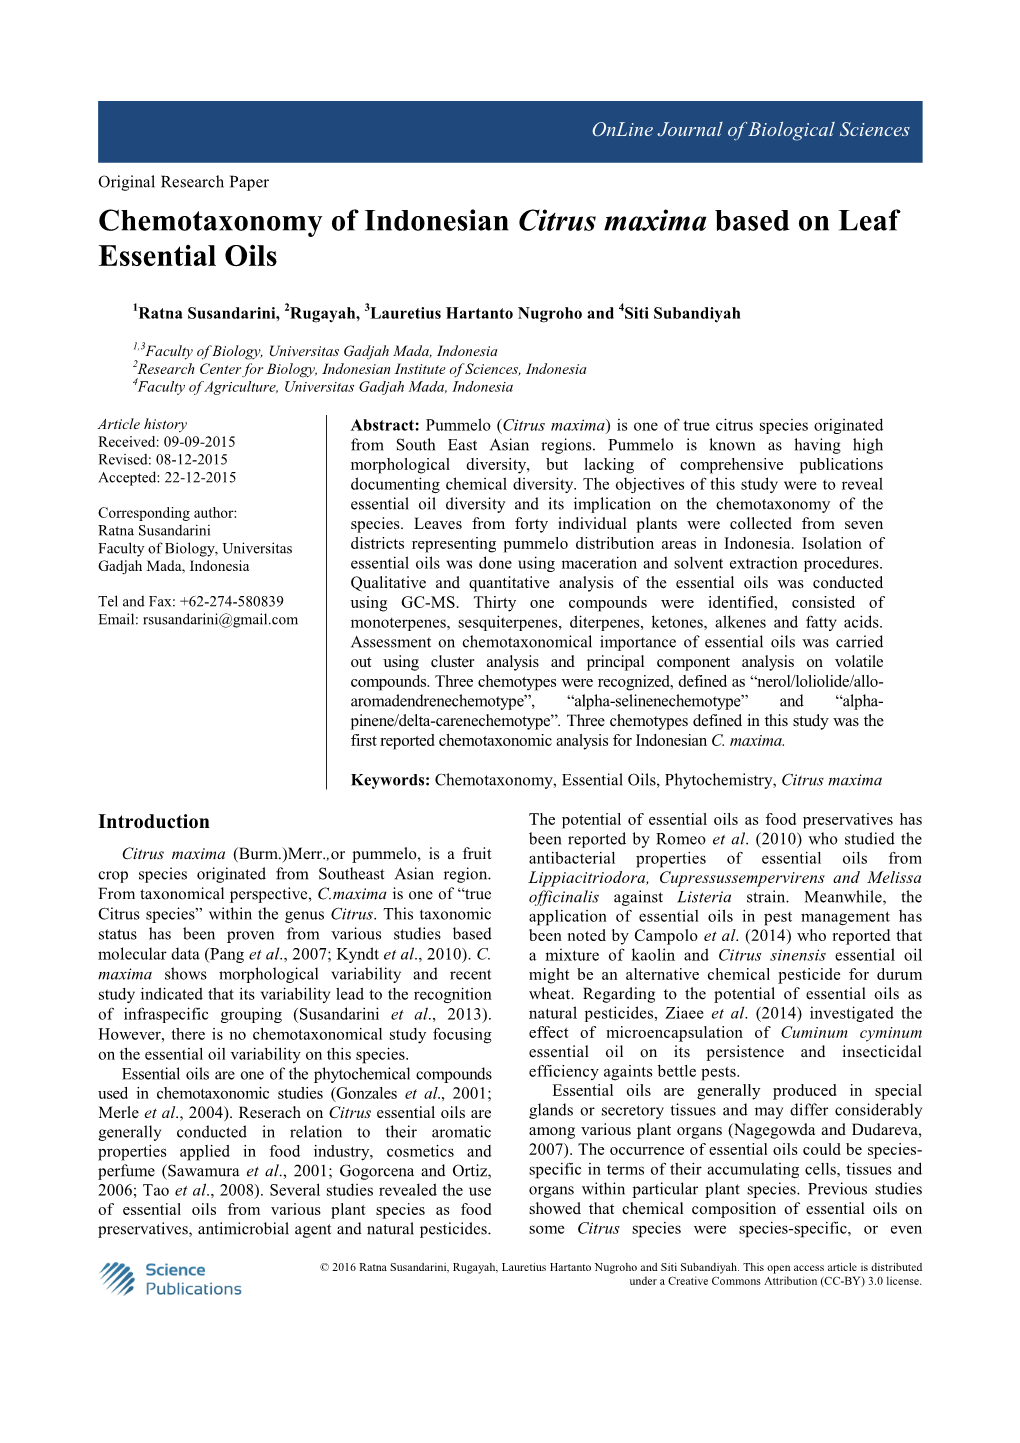 Chemotaxonomy of Indonesian Citrus Maxima Based on Leaf Essential Oils